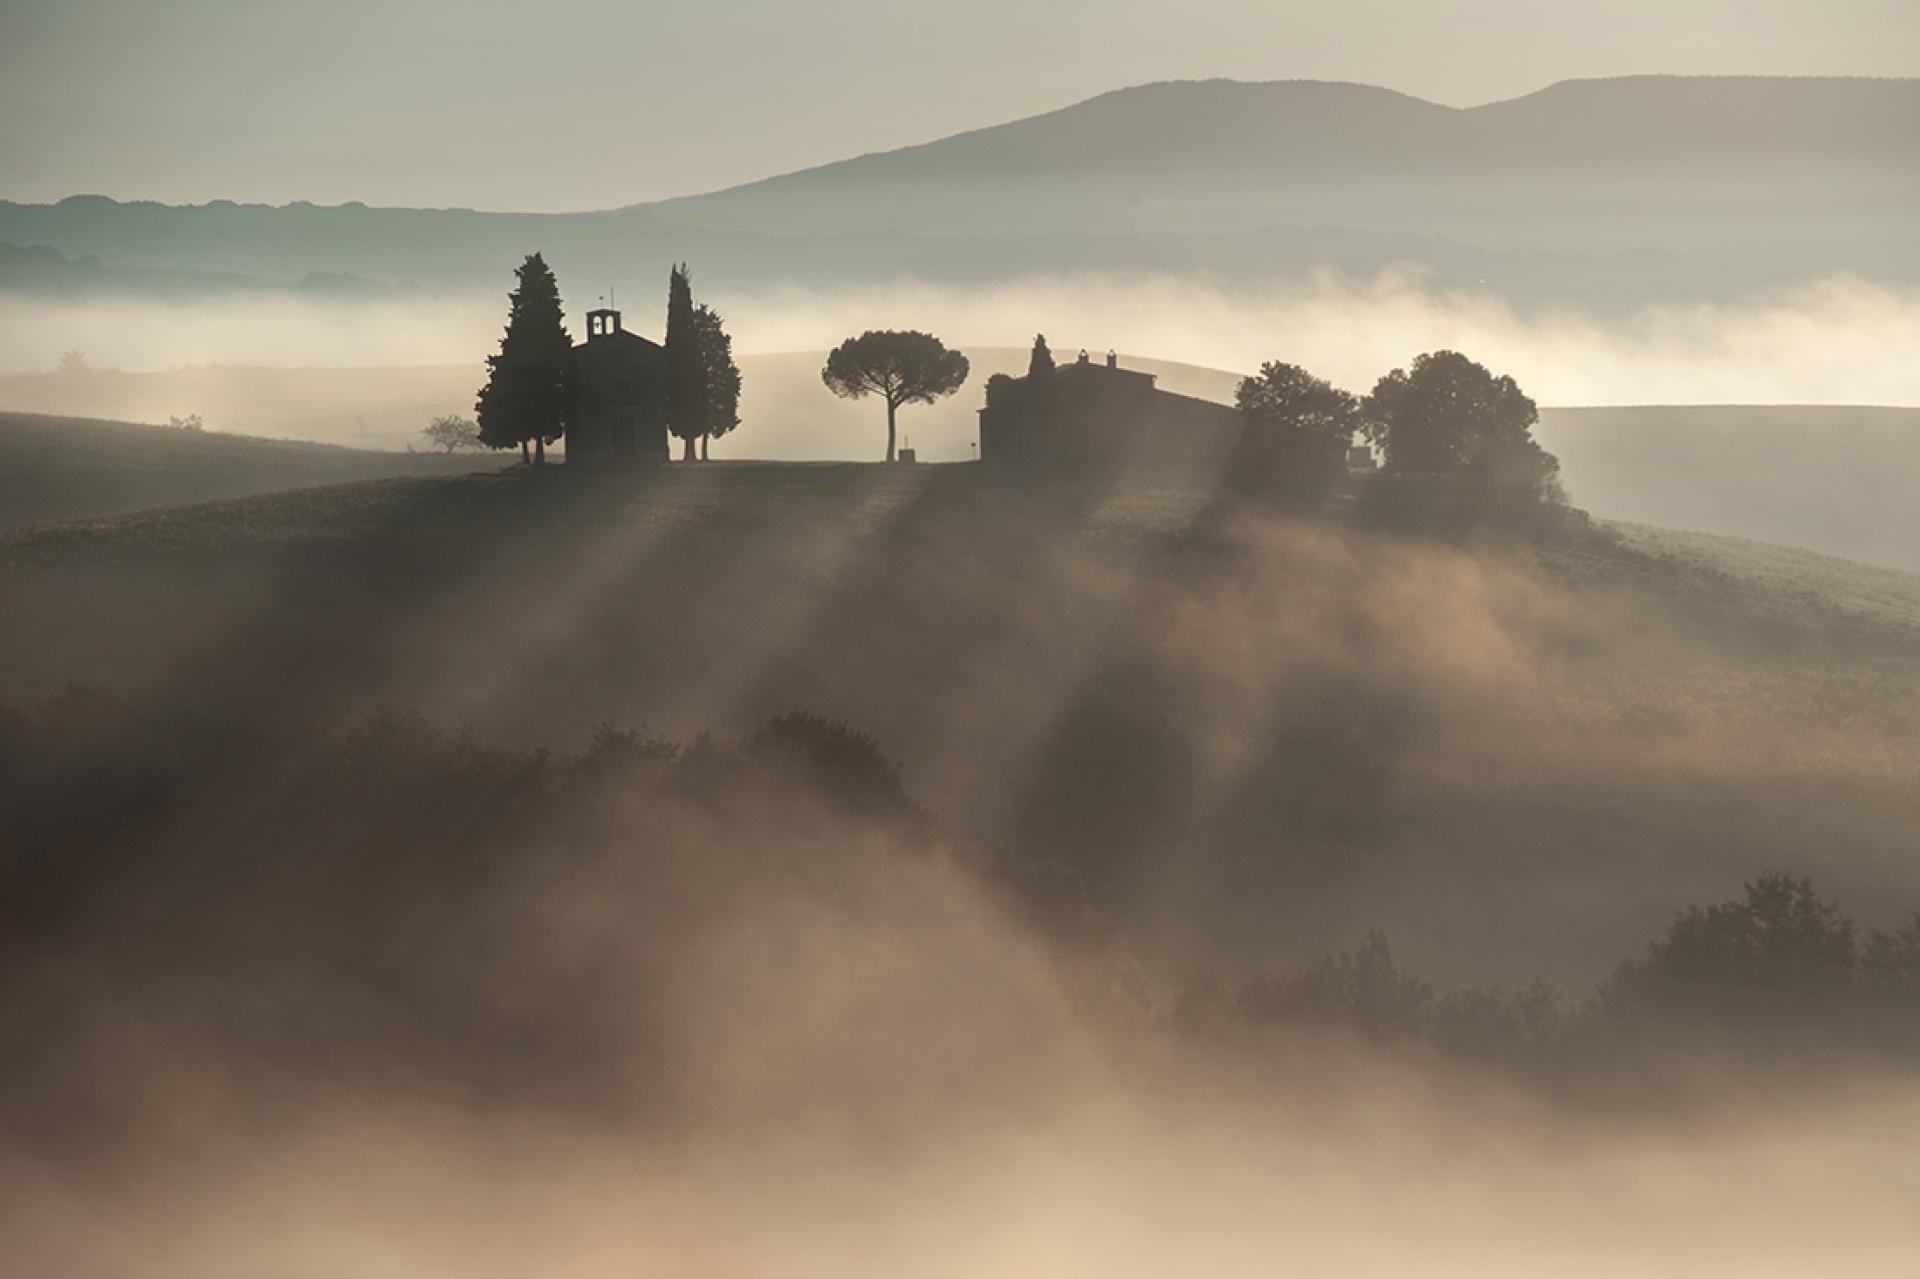 New York Photography Awards Winner - Light and Fog in Tuscany